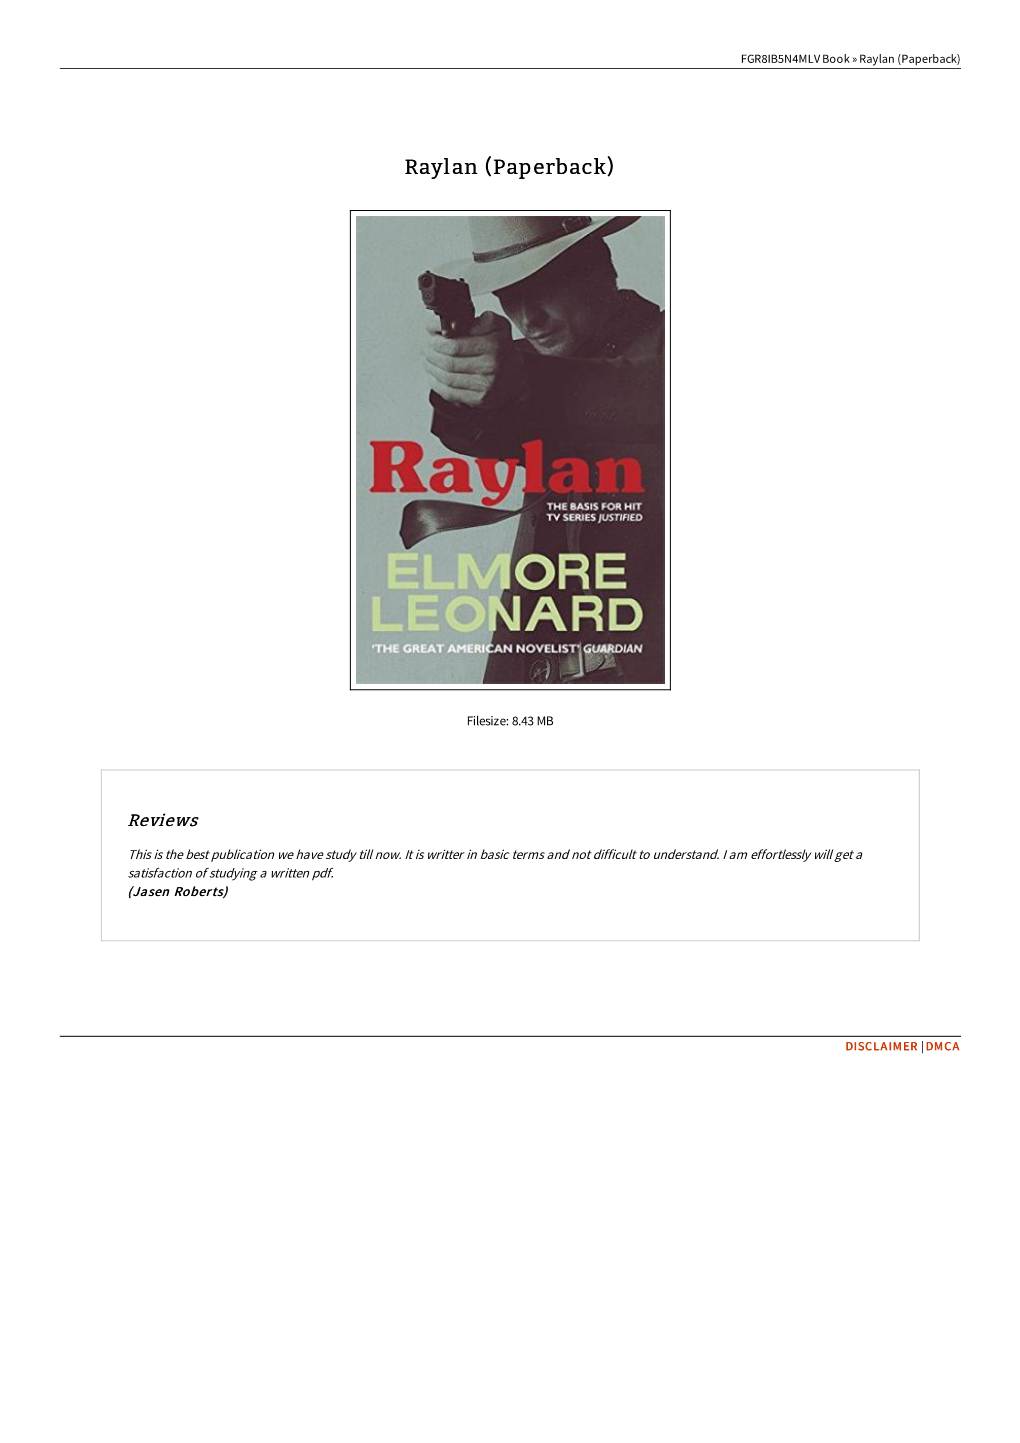 Download Kindle / Raylan (Paperback)